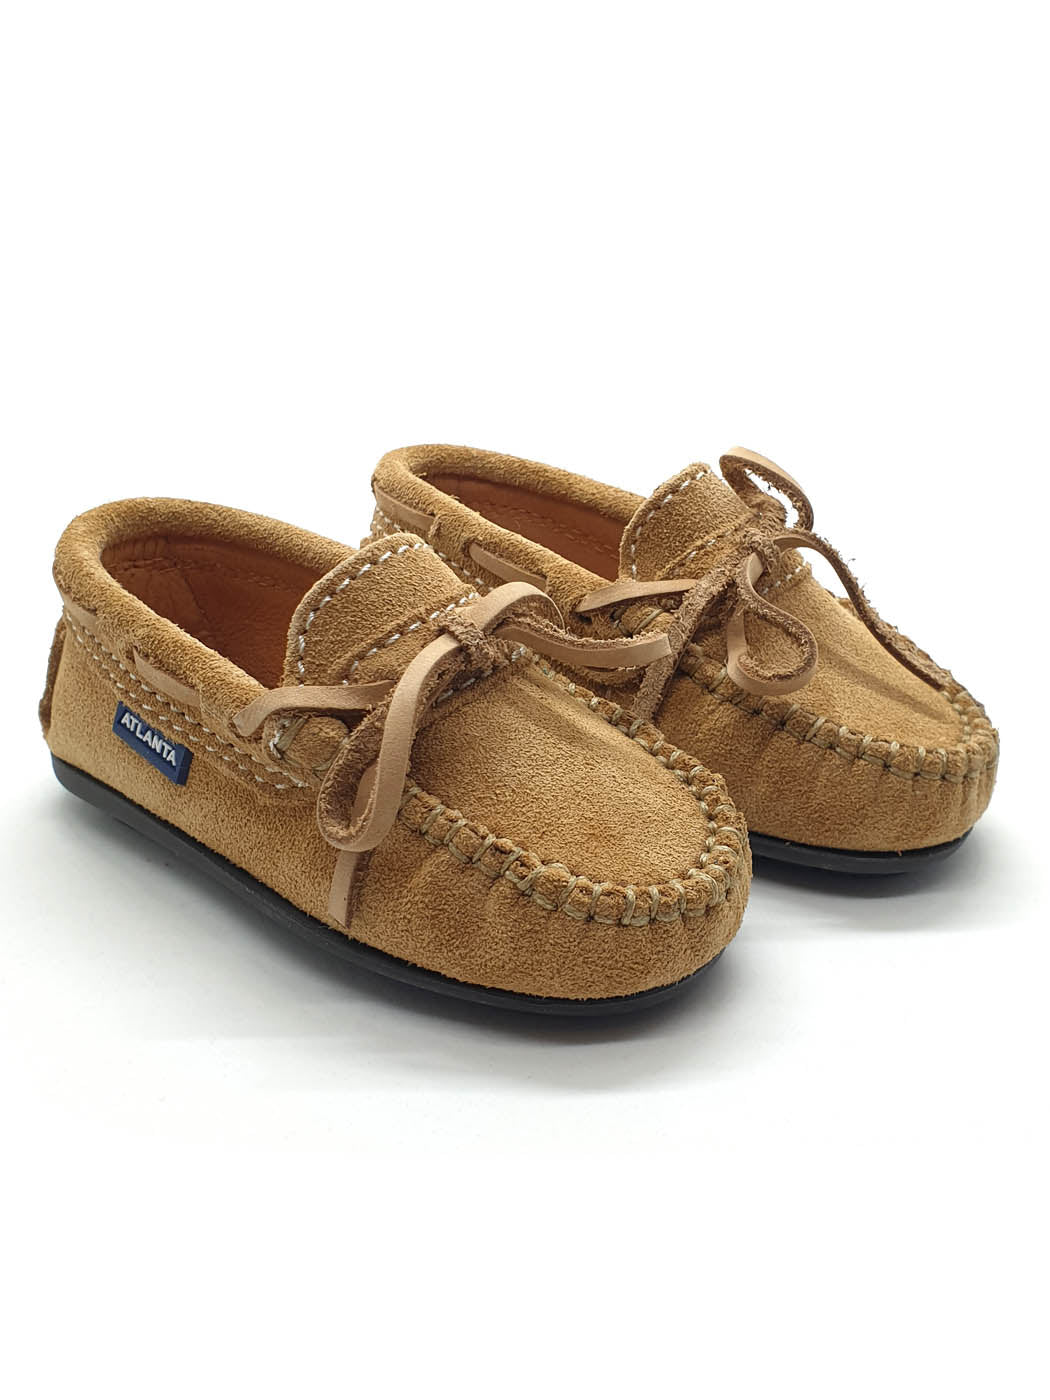 Atlanta Mocassin-Baby Shoes Moccasins Camel-002G022